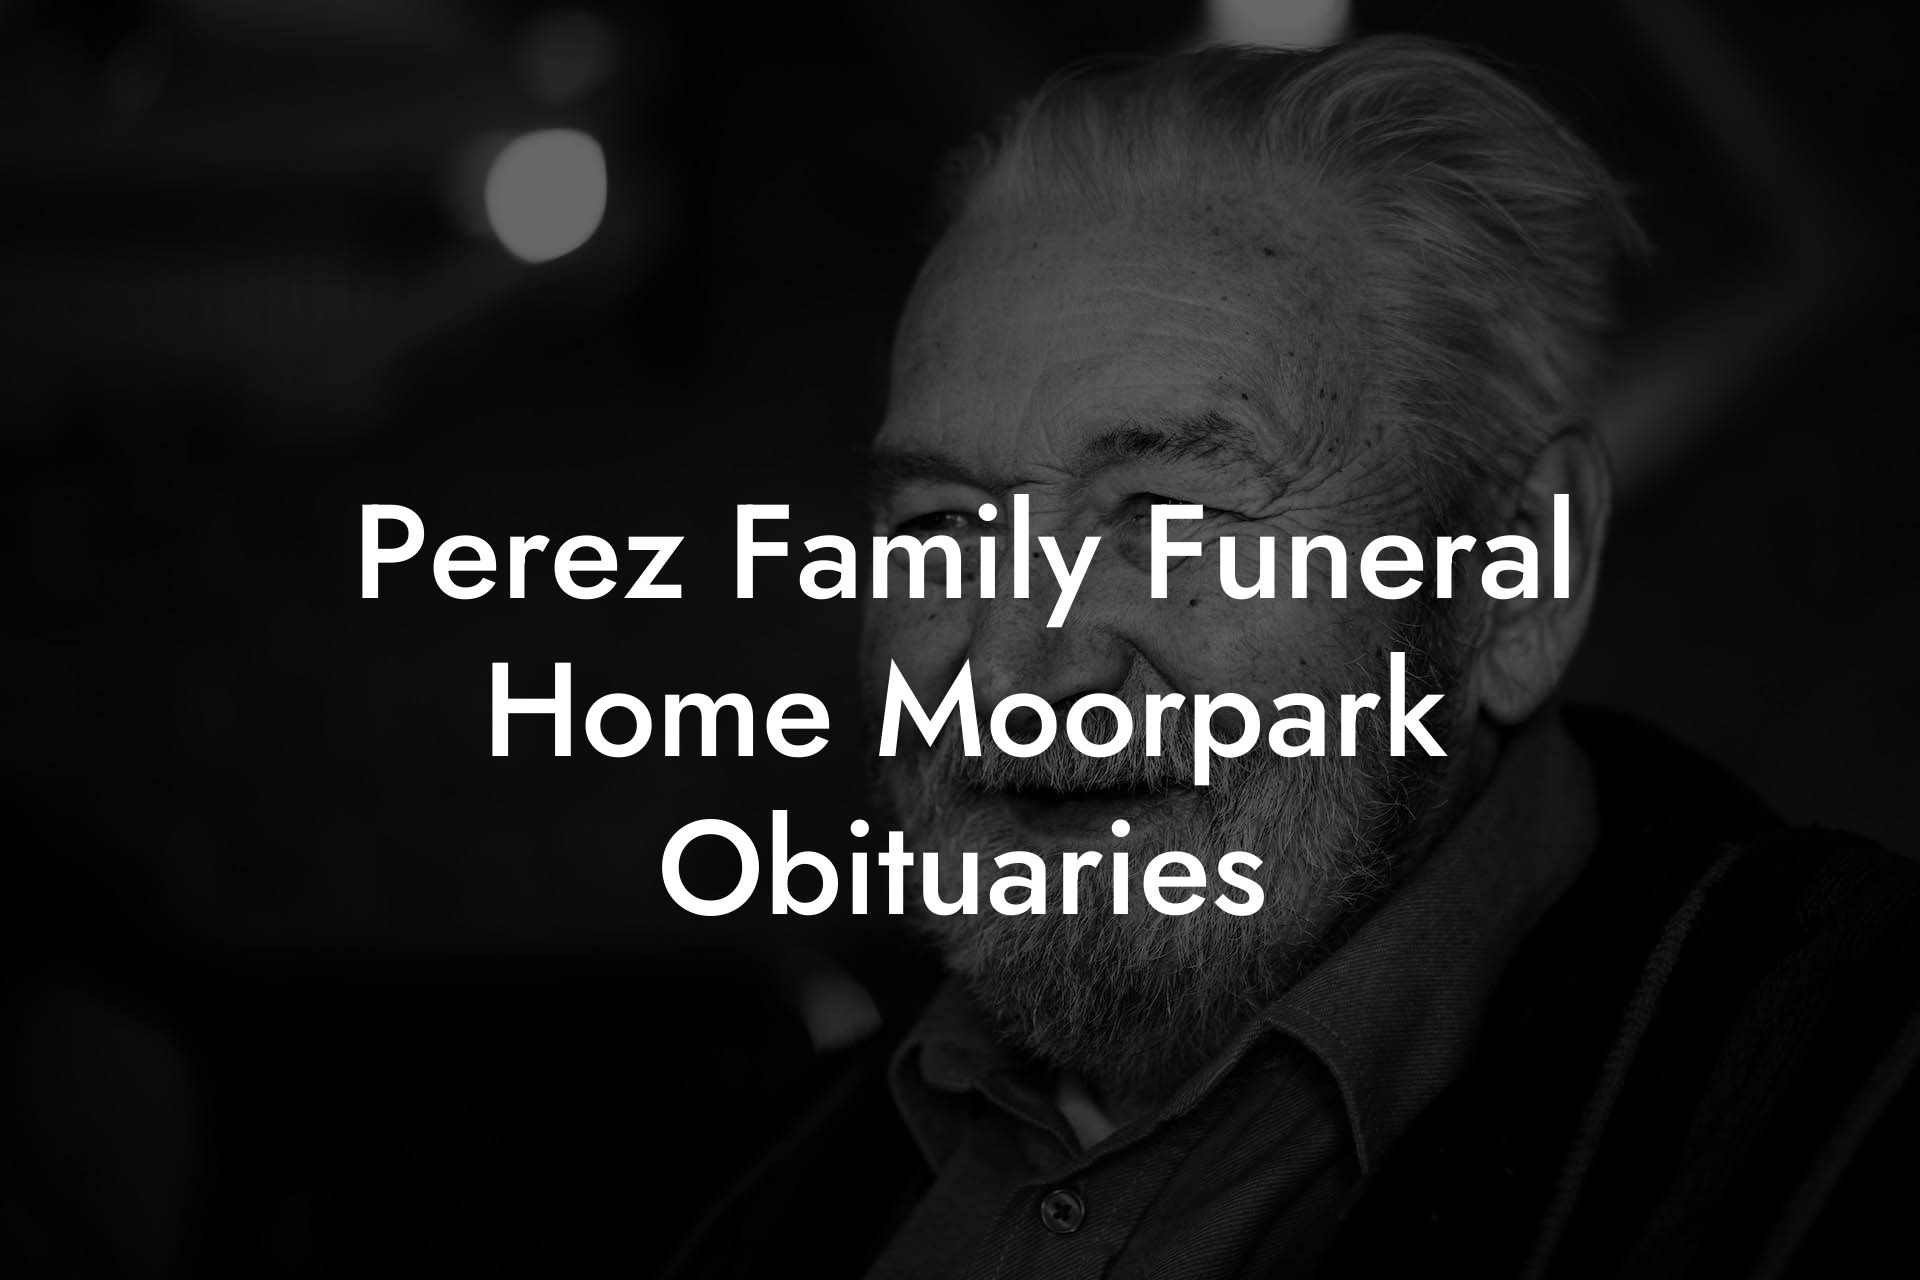 Perez Family Funeral Home Moorpark Obituaries